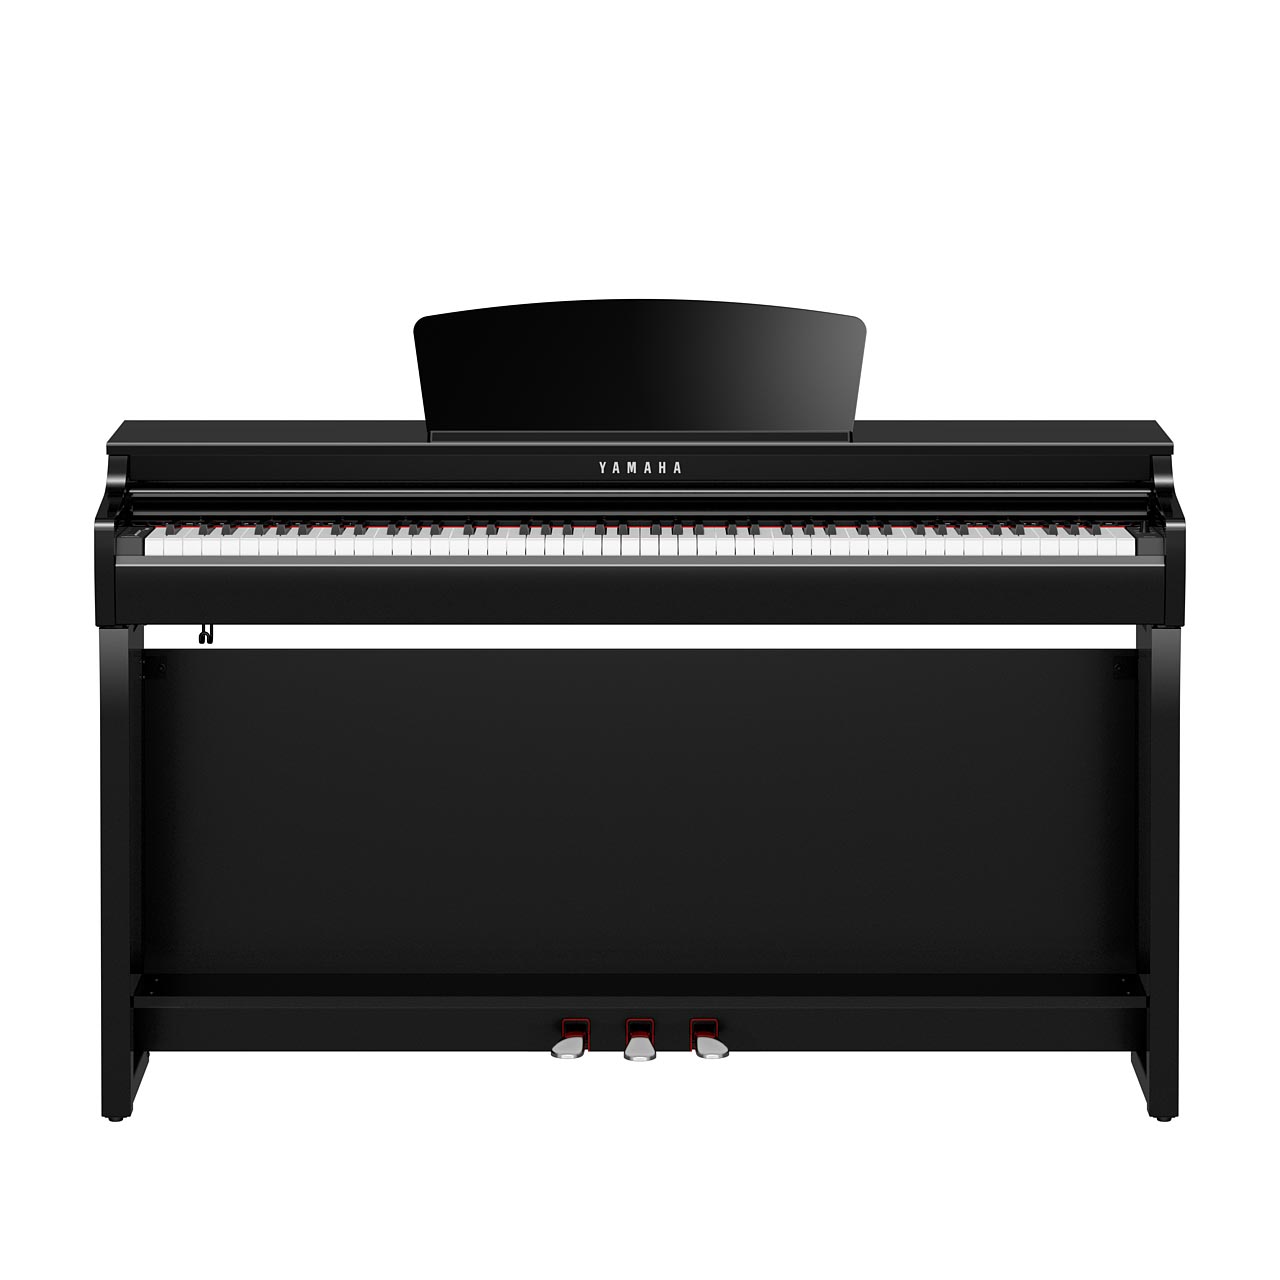 Yamaha-Clavinova-CLP-725-PE-Digitalpiano-schwarz-poliert-Front-Pianohaus-Filipski